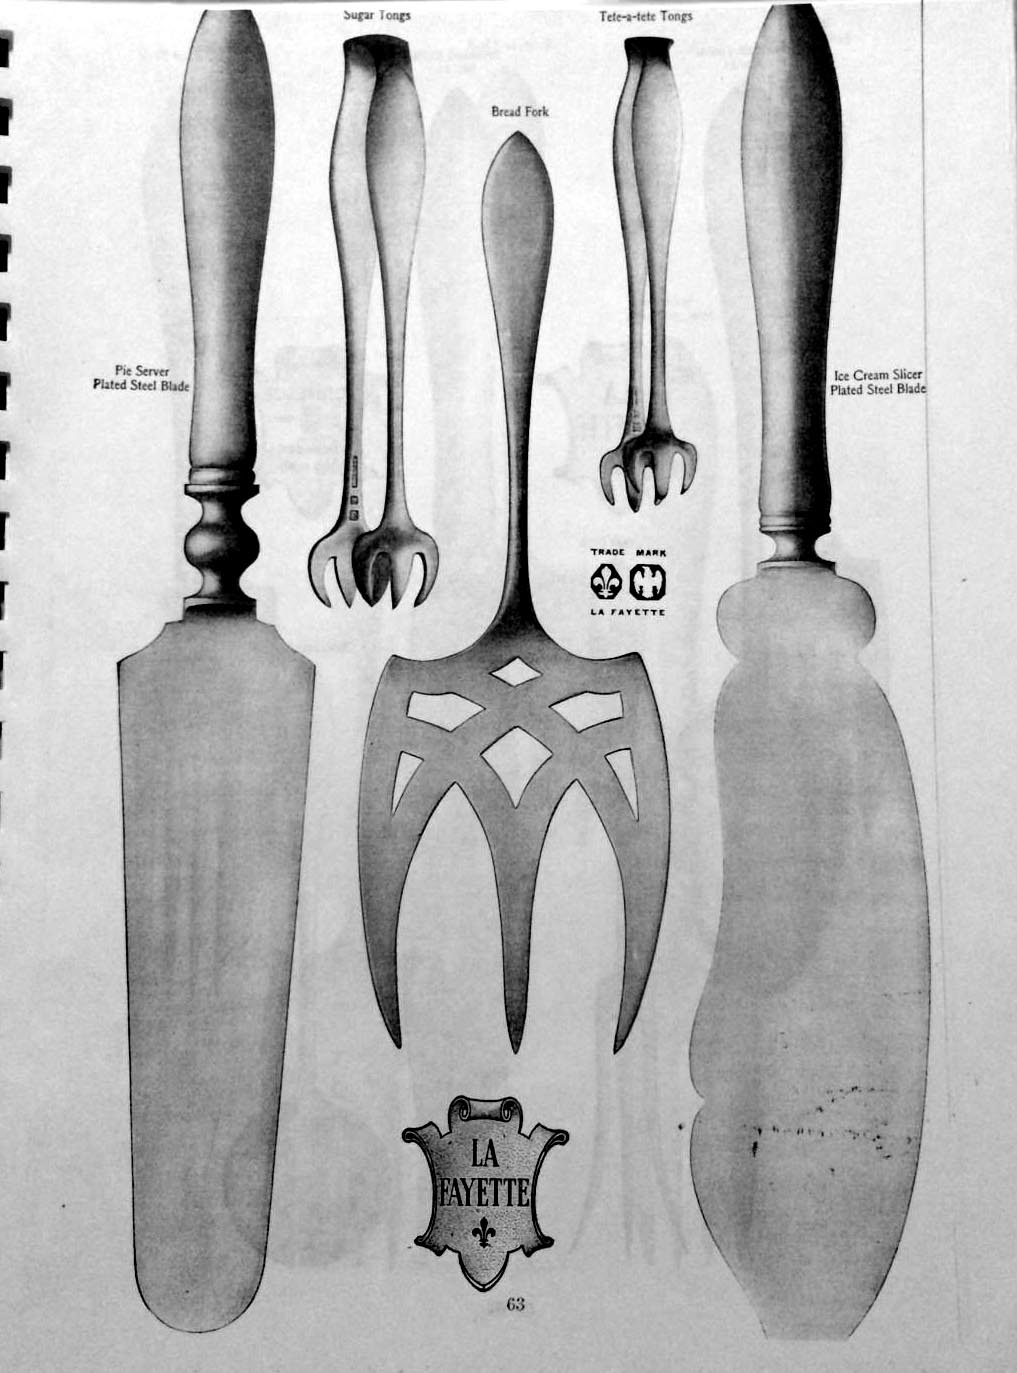 Towle Lafayette catalog sugar tongs 1913.jpg